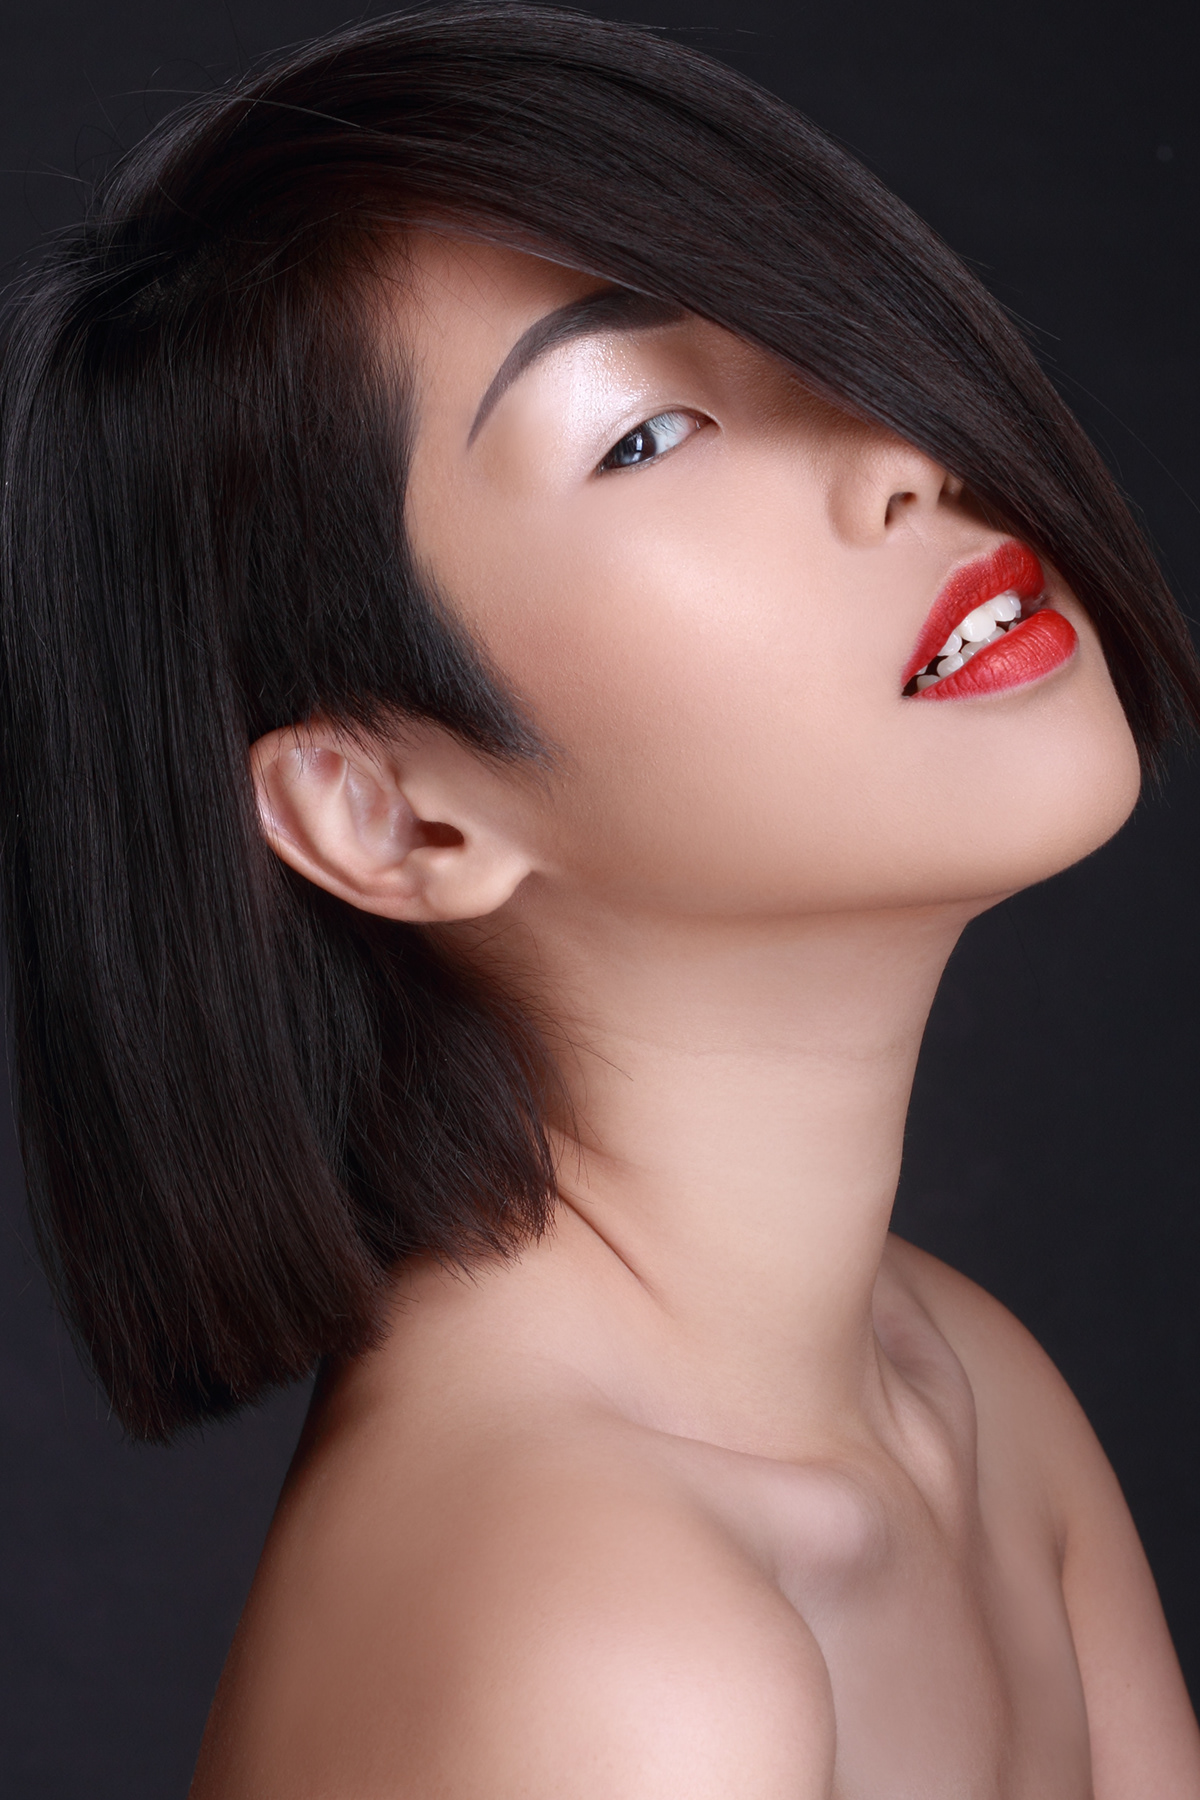 makeup artist oriental beauty Cosmetic asian surabaya indonesia agency larascream niken xu female model